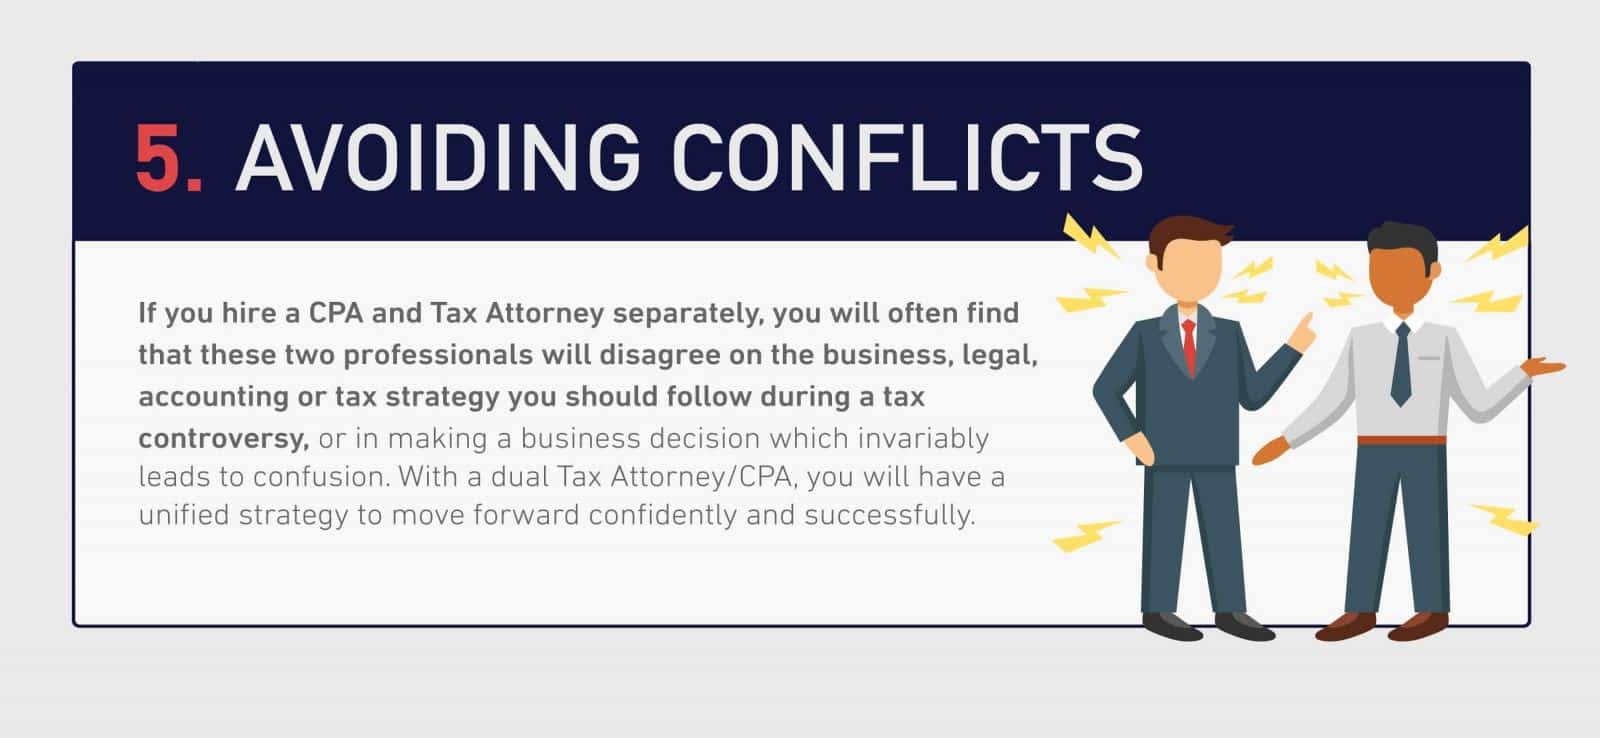 Avoiding-conflicts-klasing-associates-irs-tax-audit-attorneys